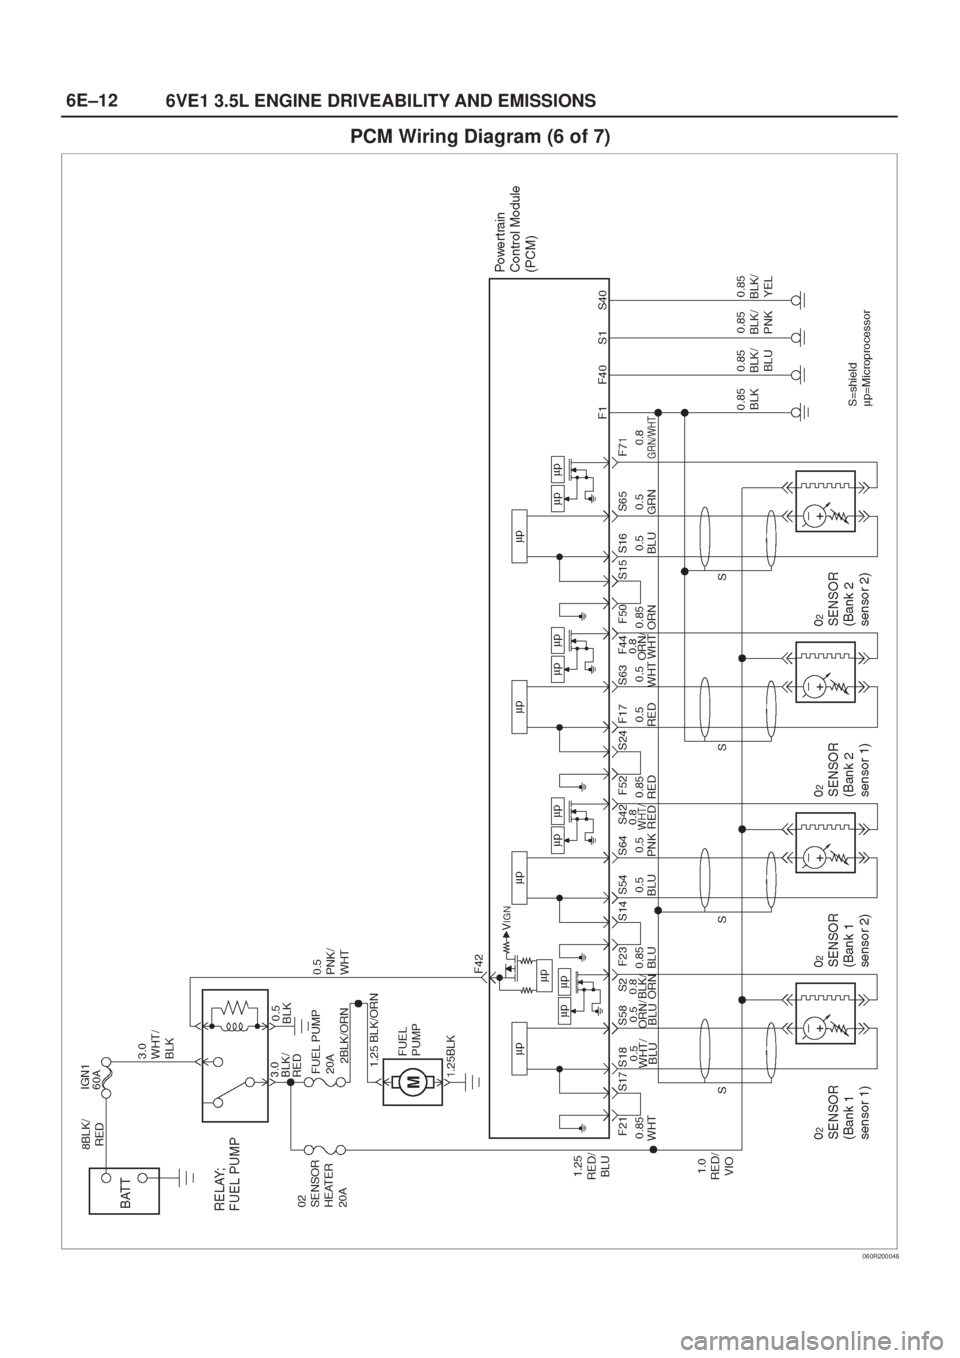 ISUZU AXIOM 2002  Service Repair Manual 6E±12
6VE1 3.5L ENGINE DRIVEABILITY AND EMISSIONS
PCM Wiring Diagram (6 of 7)
060R200046 